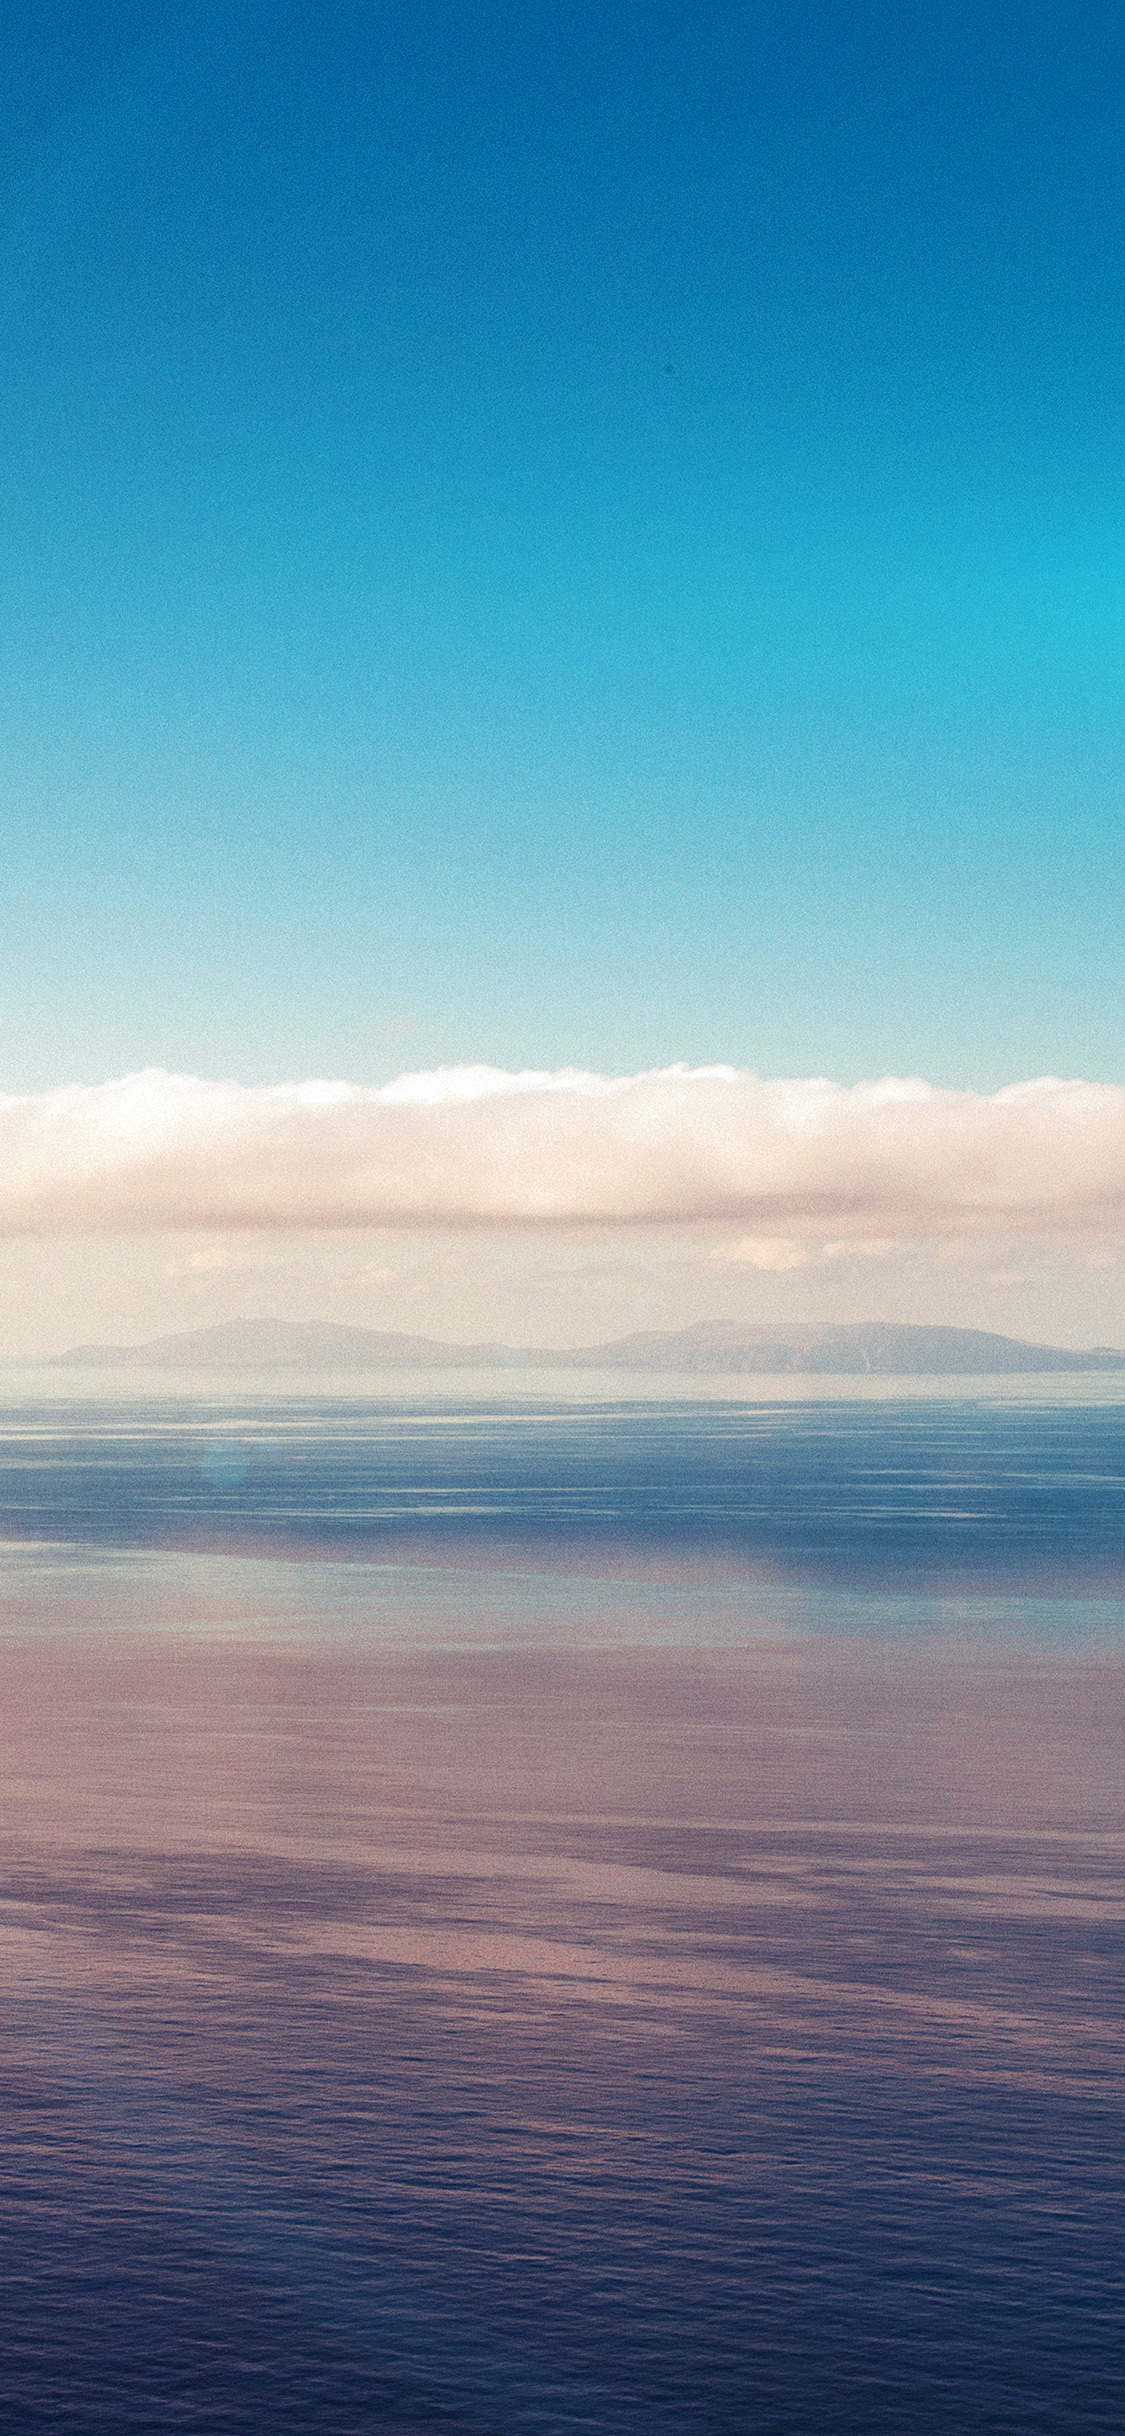 1125x2436 | iPhone11 wallpaper | mt27-blue-sky-nature-ocean-viewflare